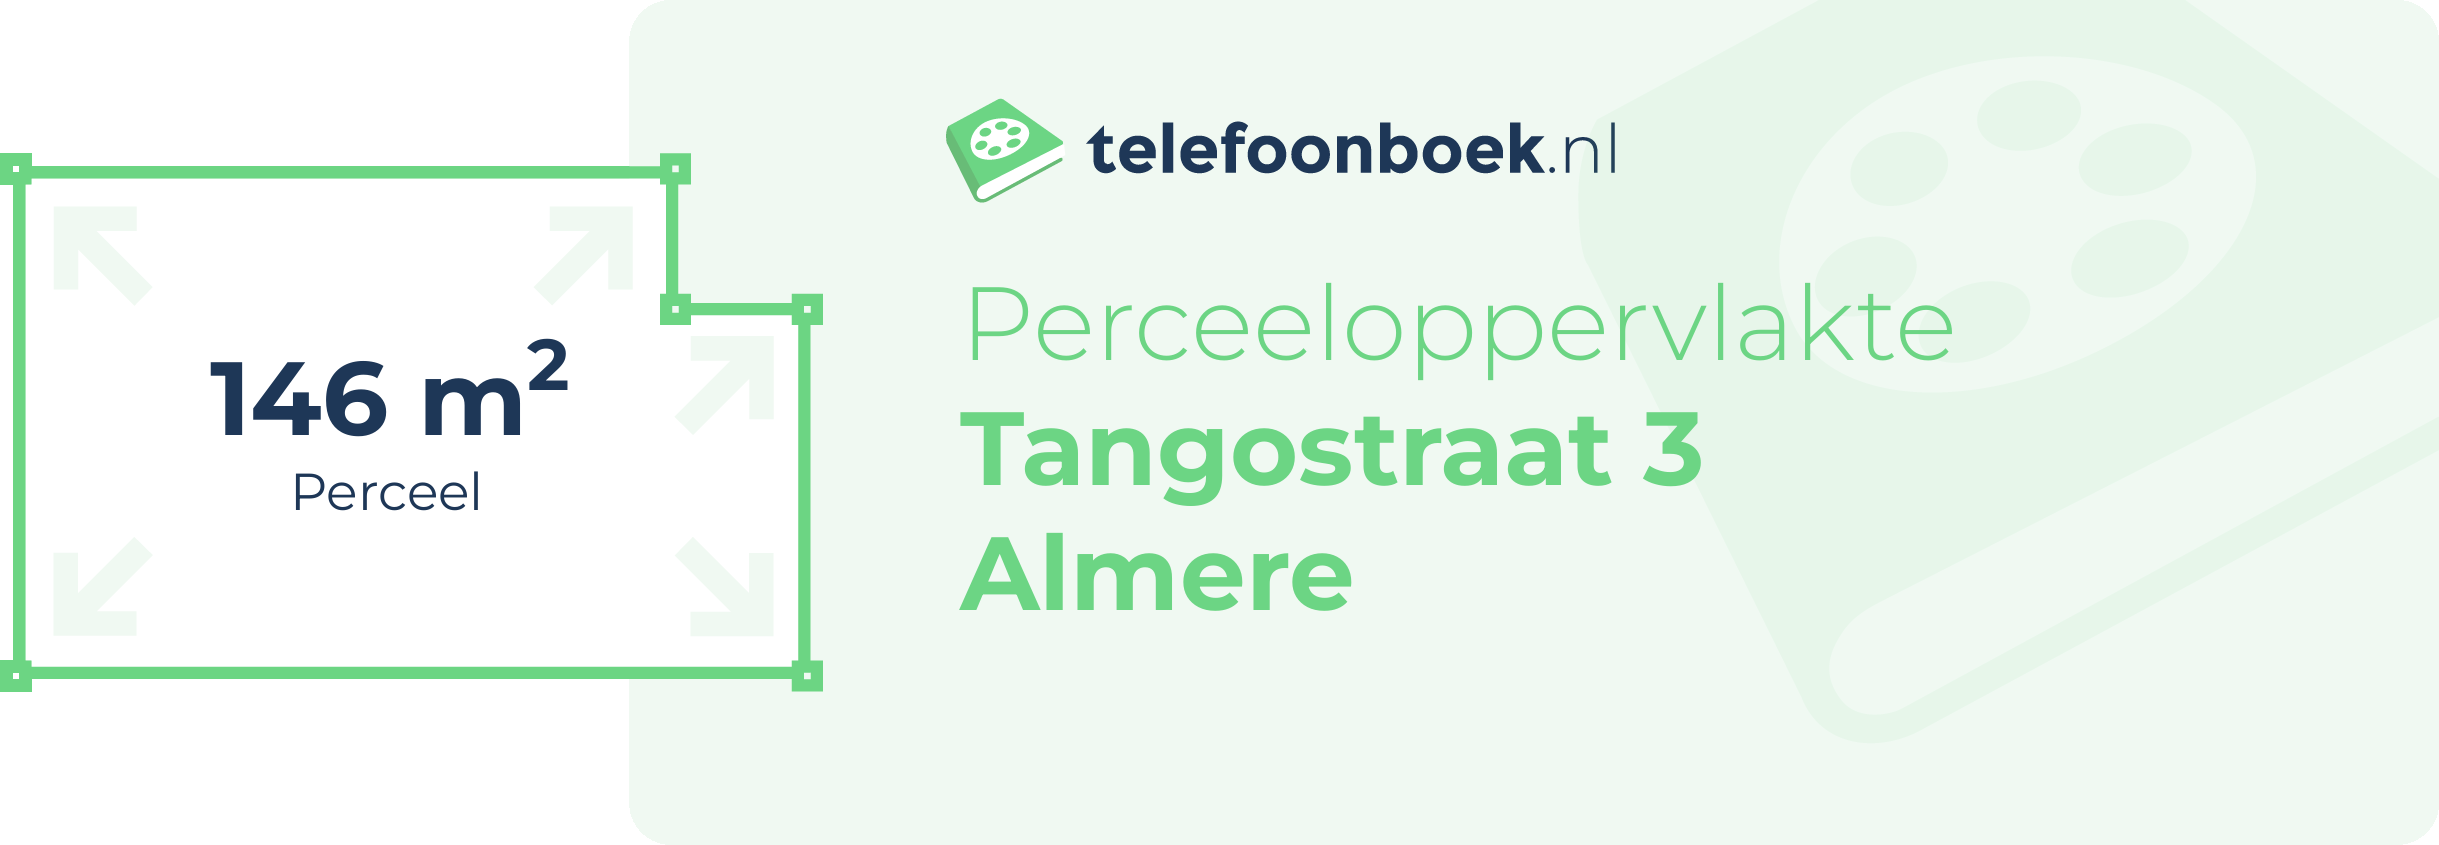 Perceeloppervlakte Tangostraat 3 Almere